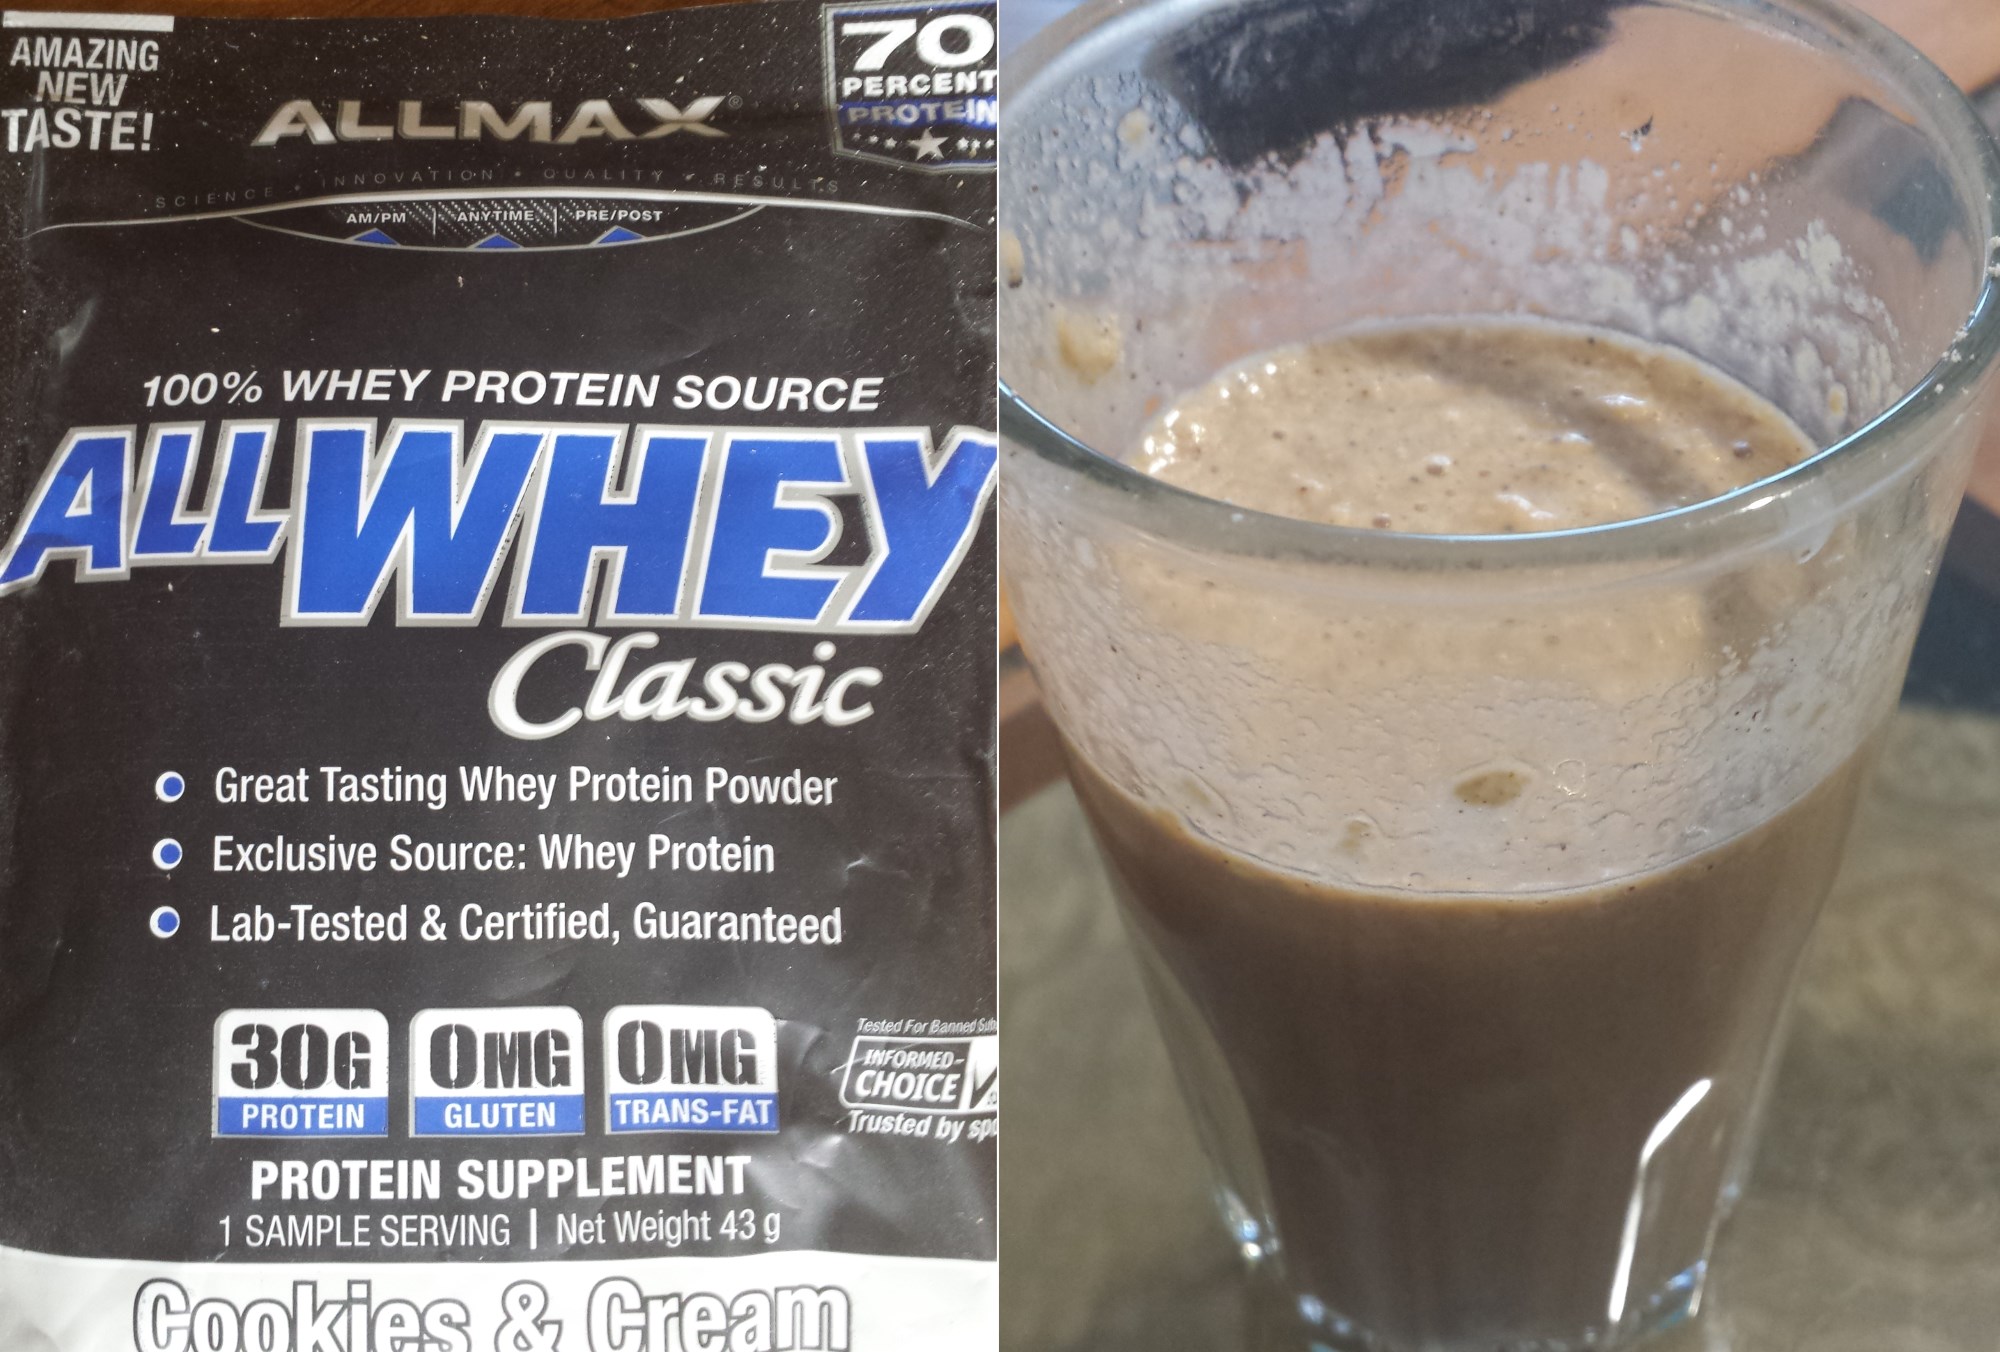 Allwhey Classic protein powdersupplement from Allmax